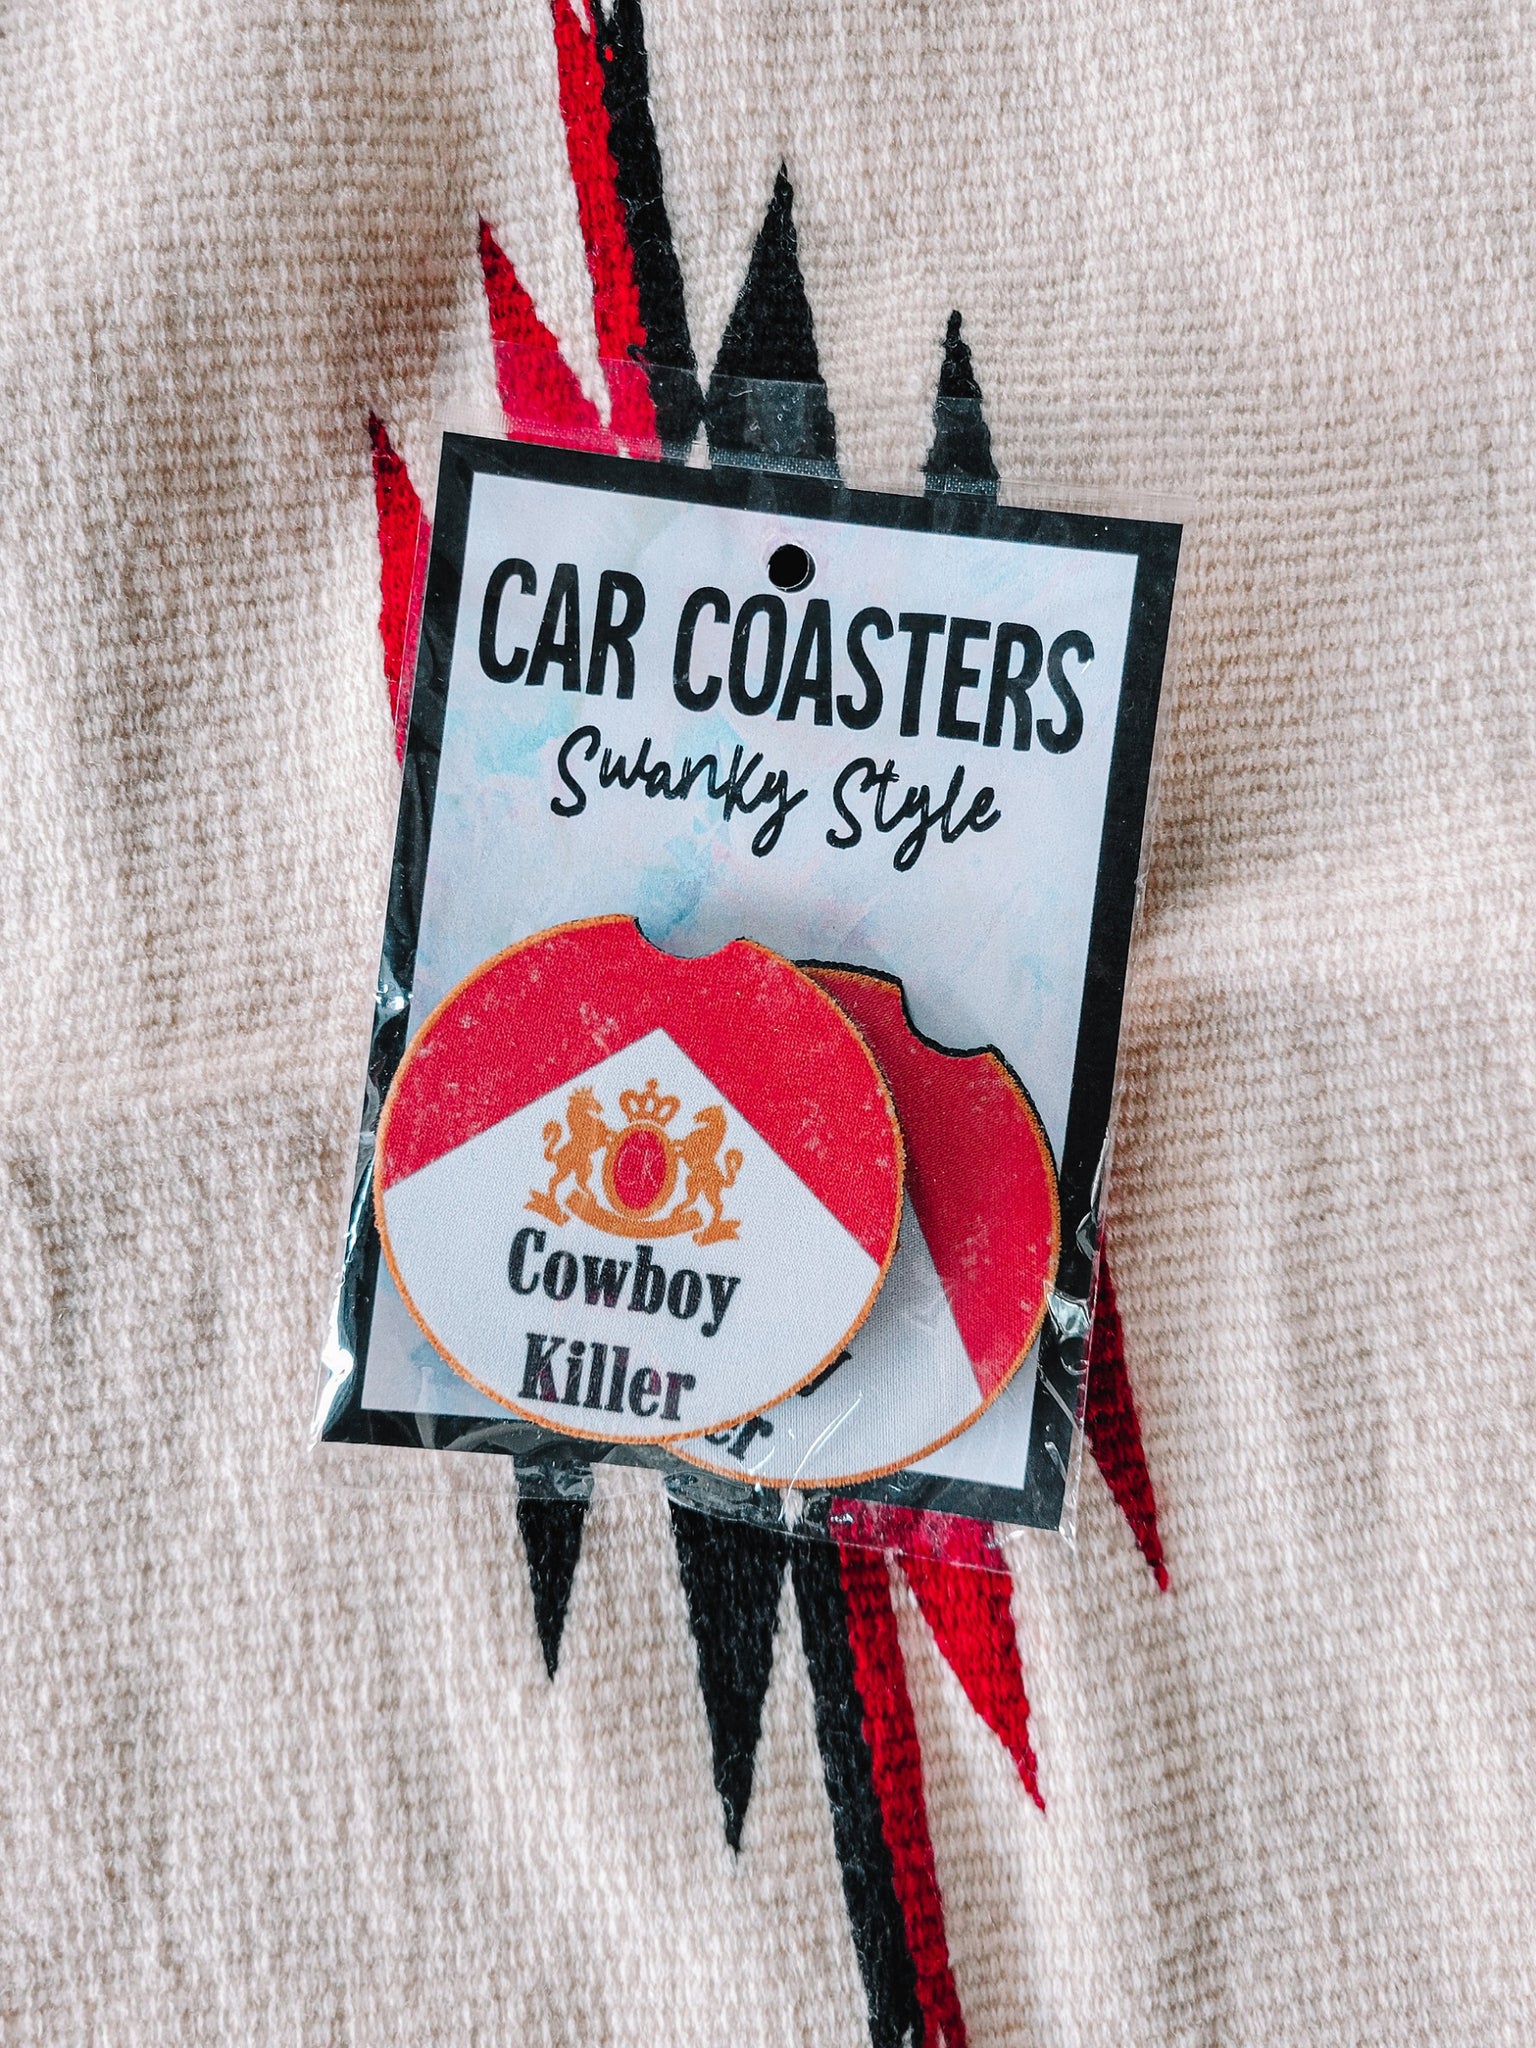 Killer Car Coasters